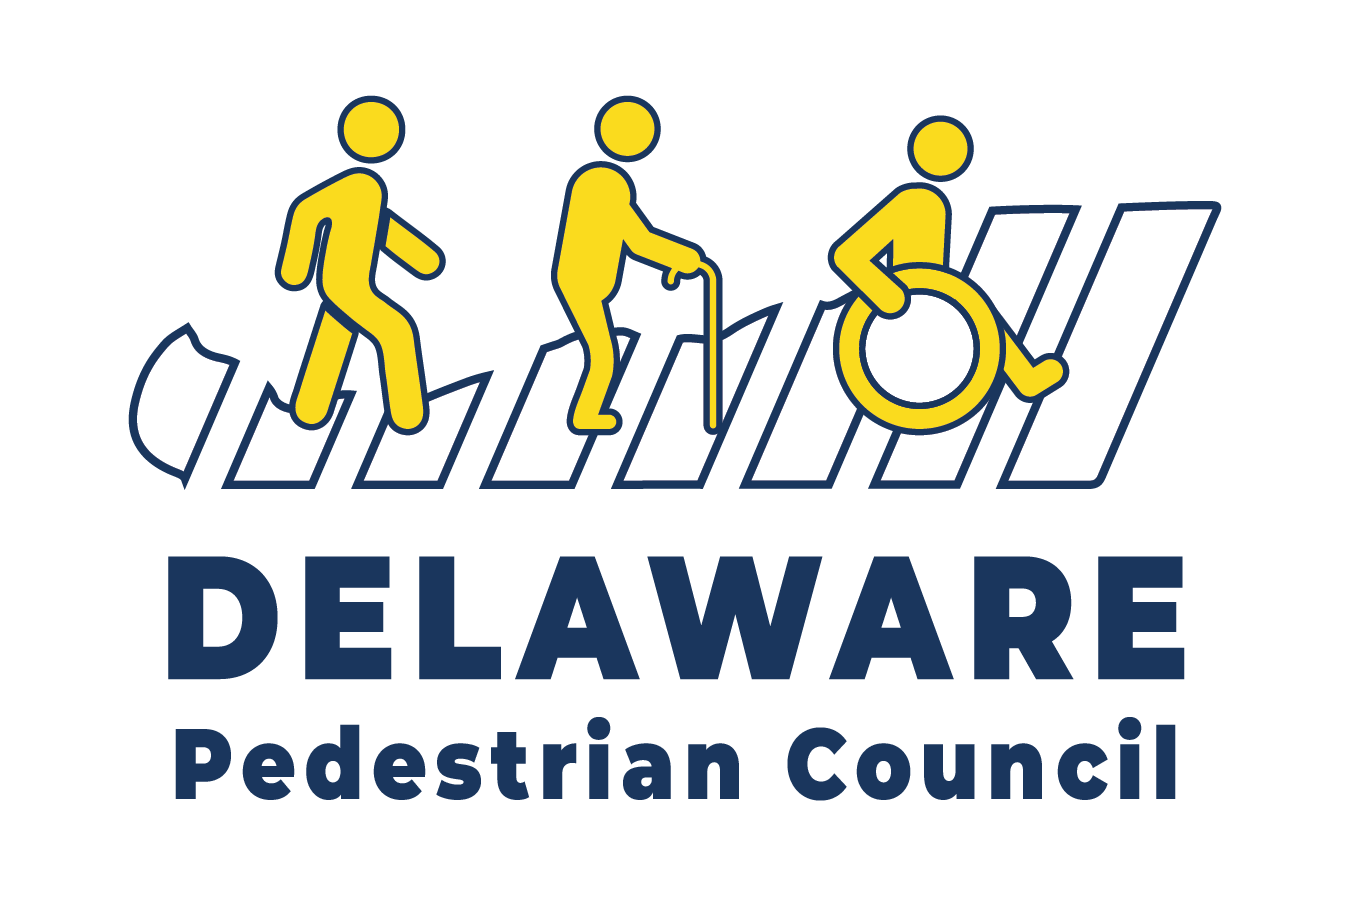 Advisory Council on Walk and Ped Logo